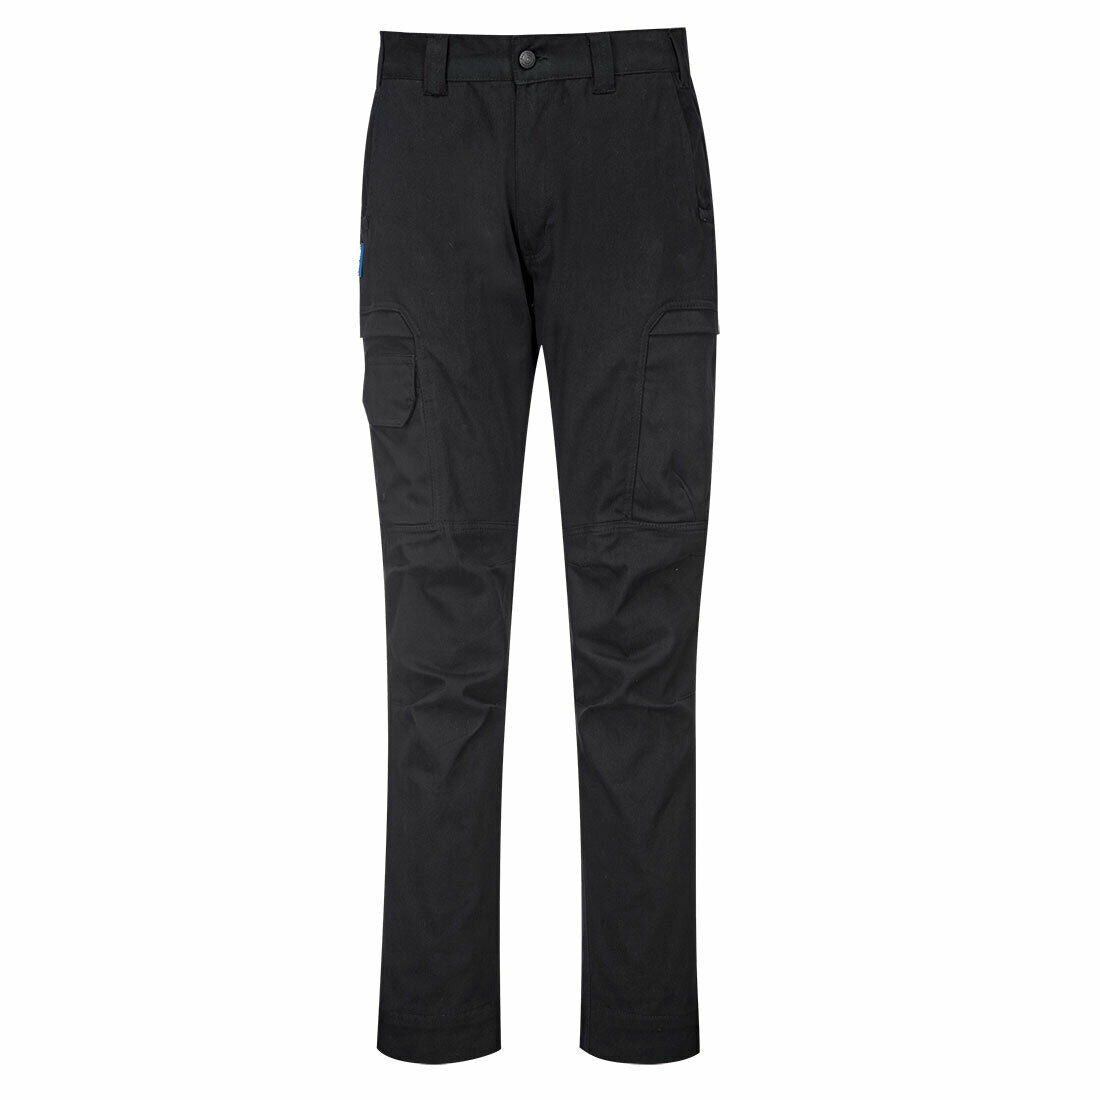 Portwest Mens KX3 Cargo Pants Trouser Slim Fitting Work Cotton Stretch T801